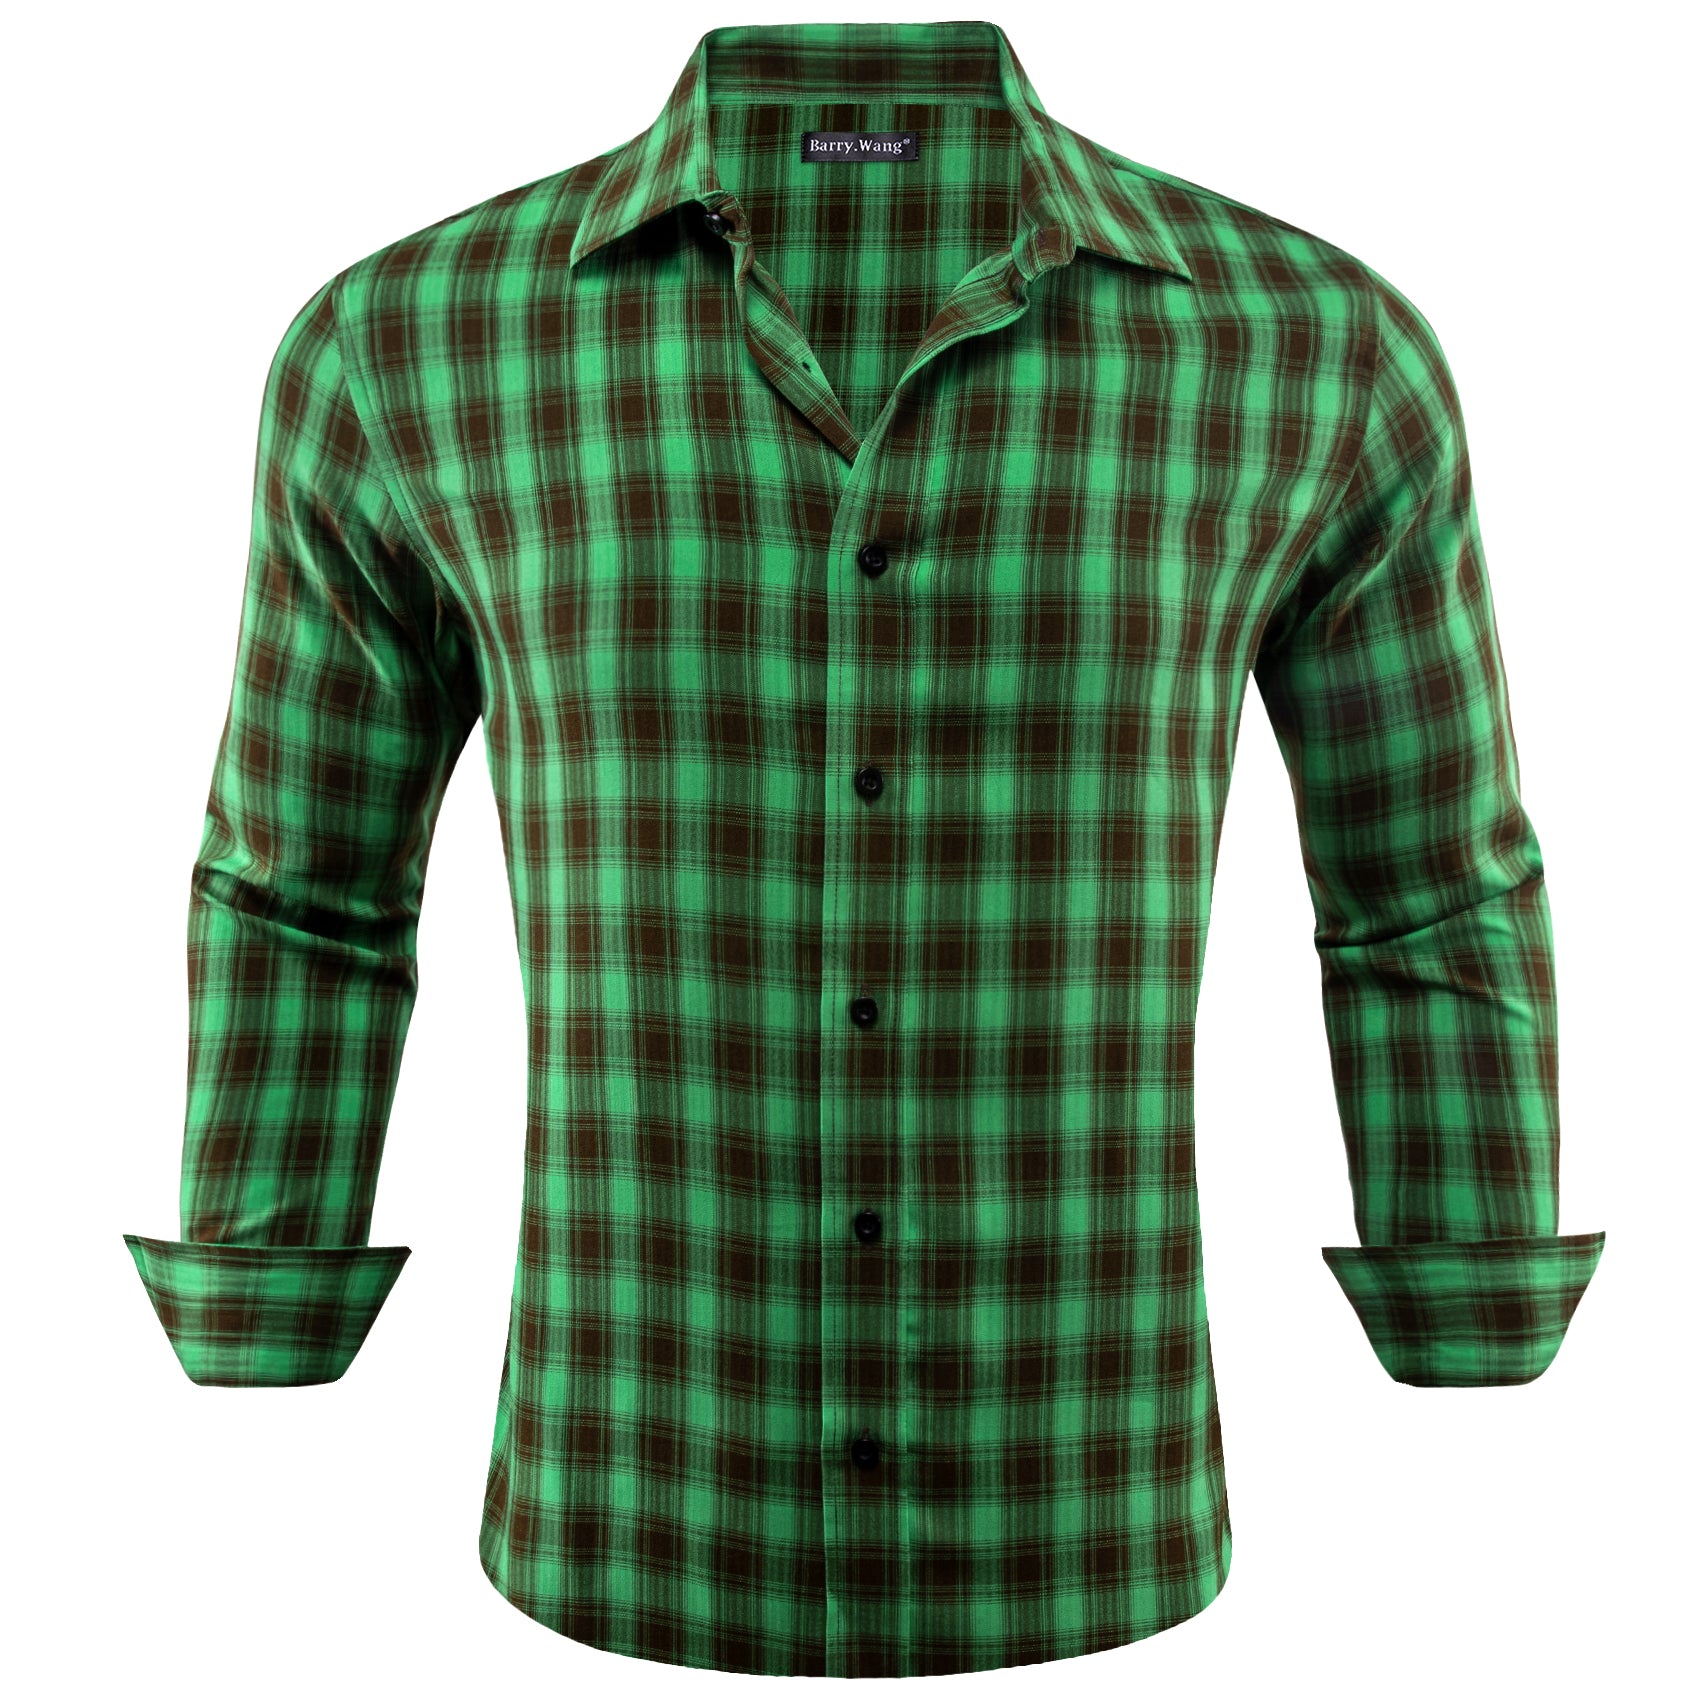 Barry.wang Green Plaid Men's Shirt